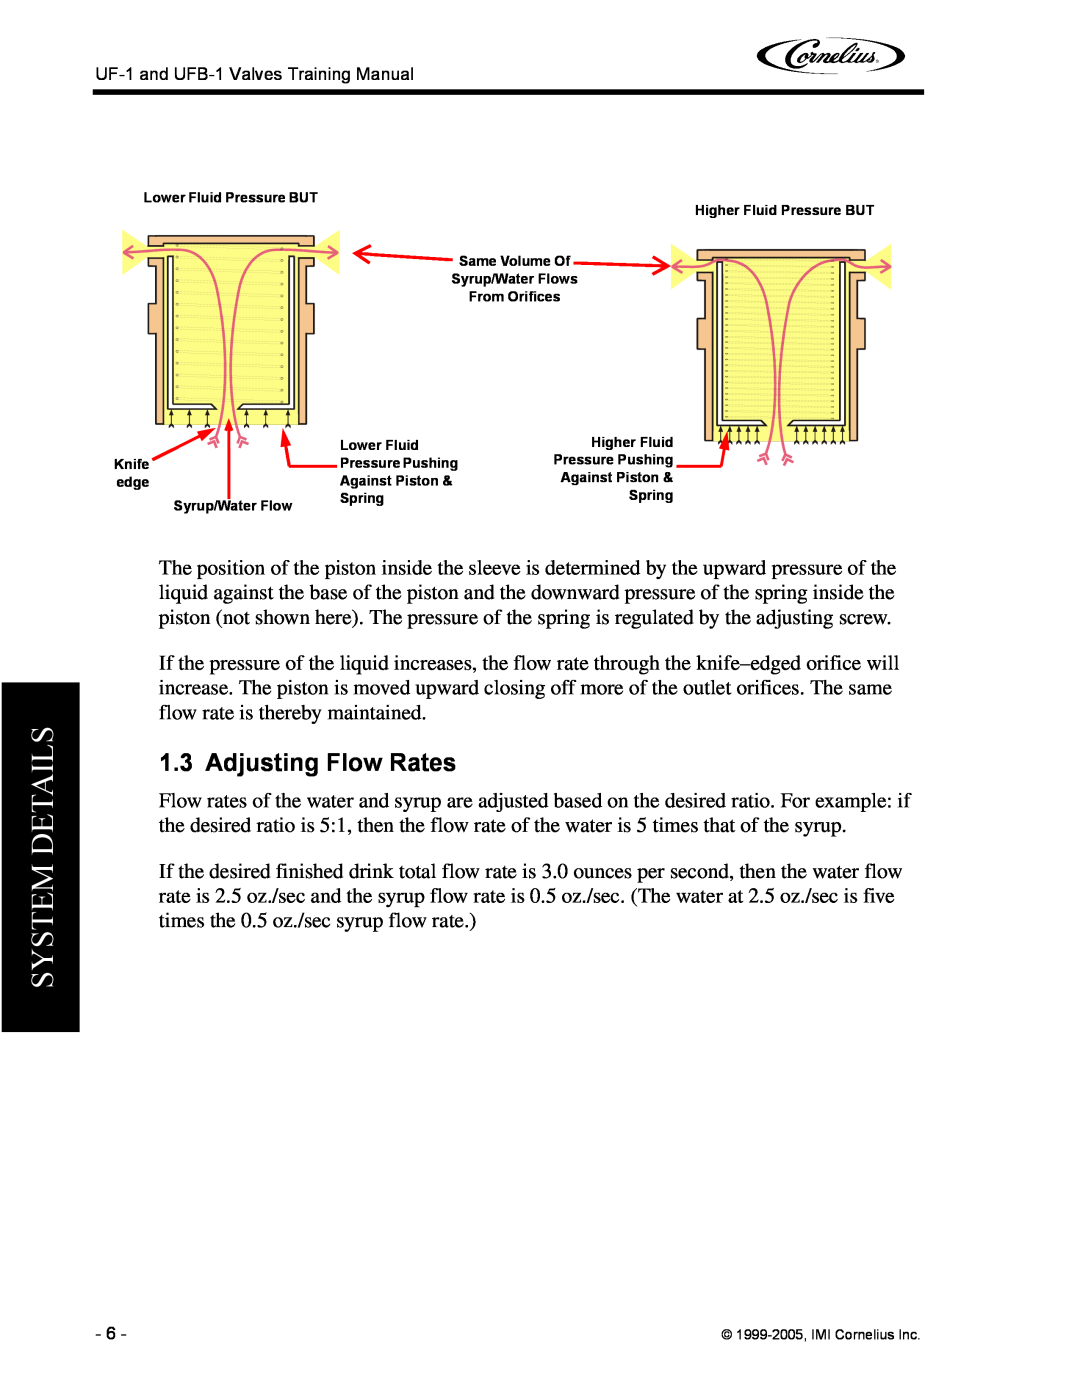 Cornelius manual Adjusting Flow Rates, System Details, UF-1and UFB-1Valves Training Manual 